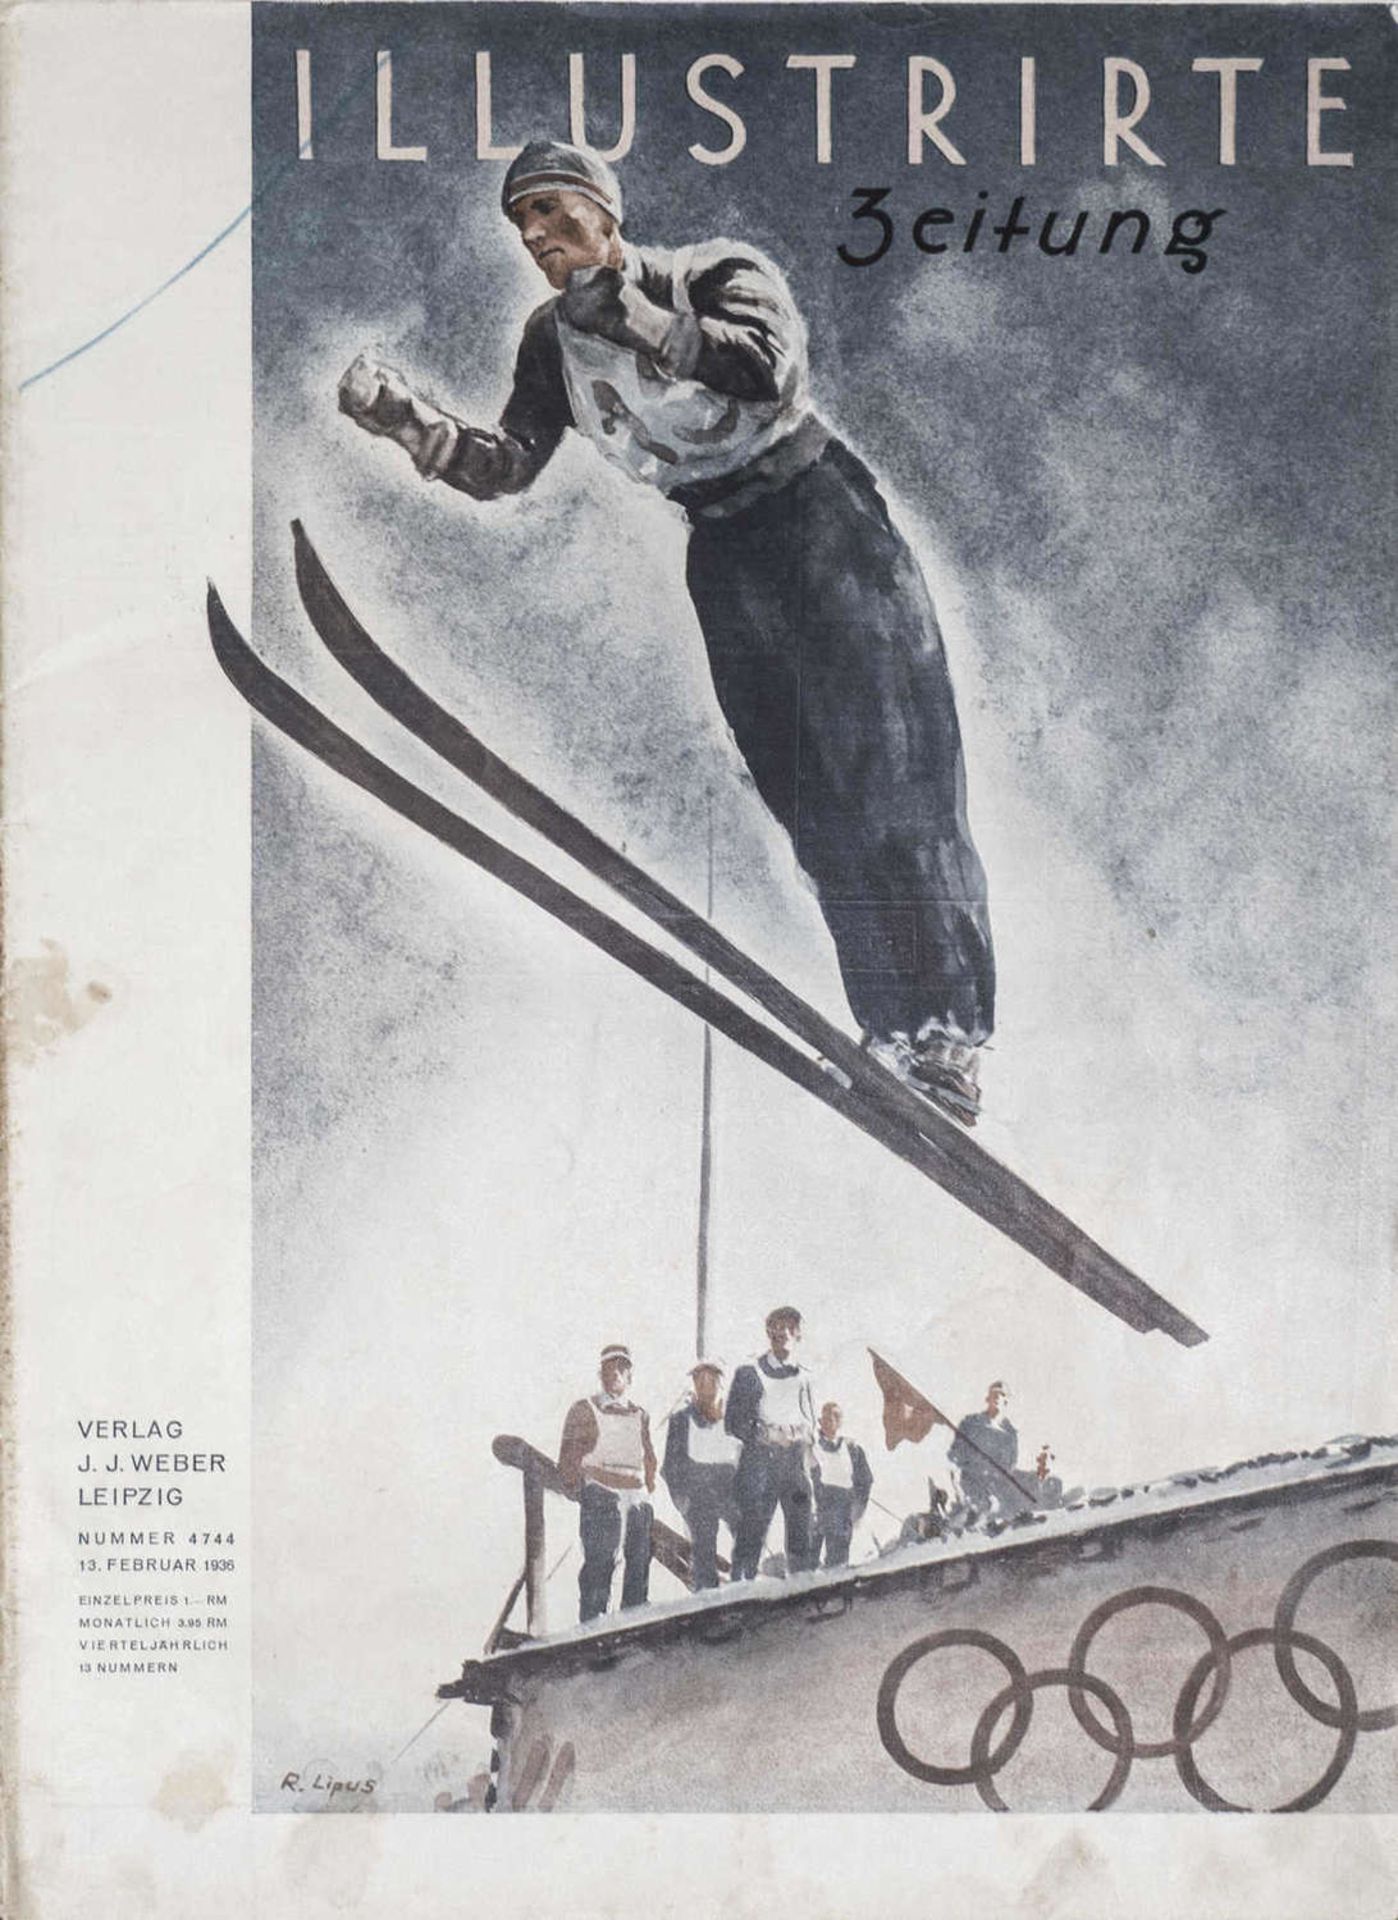 Illustrierte Zeitung, Verlag J.J. Weber Leipzig, 13.Februar 1936.